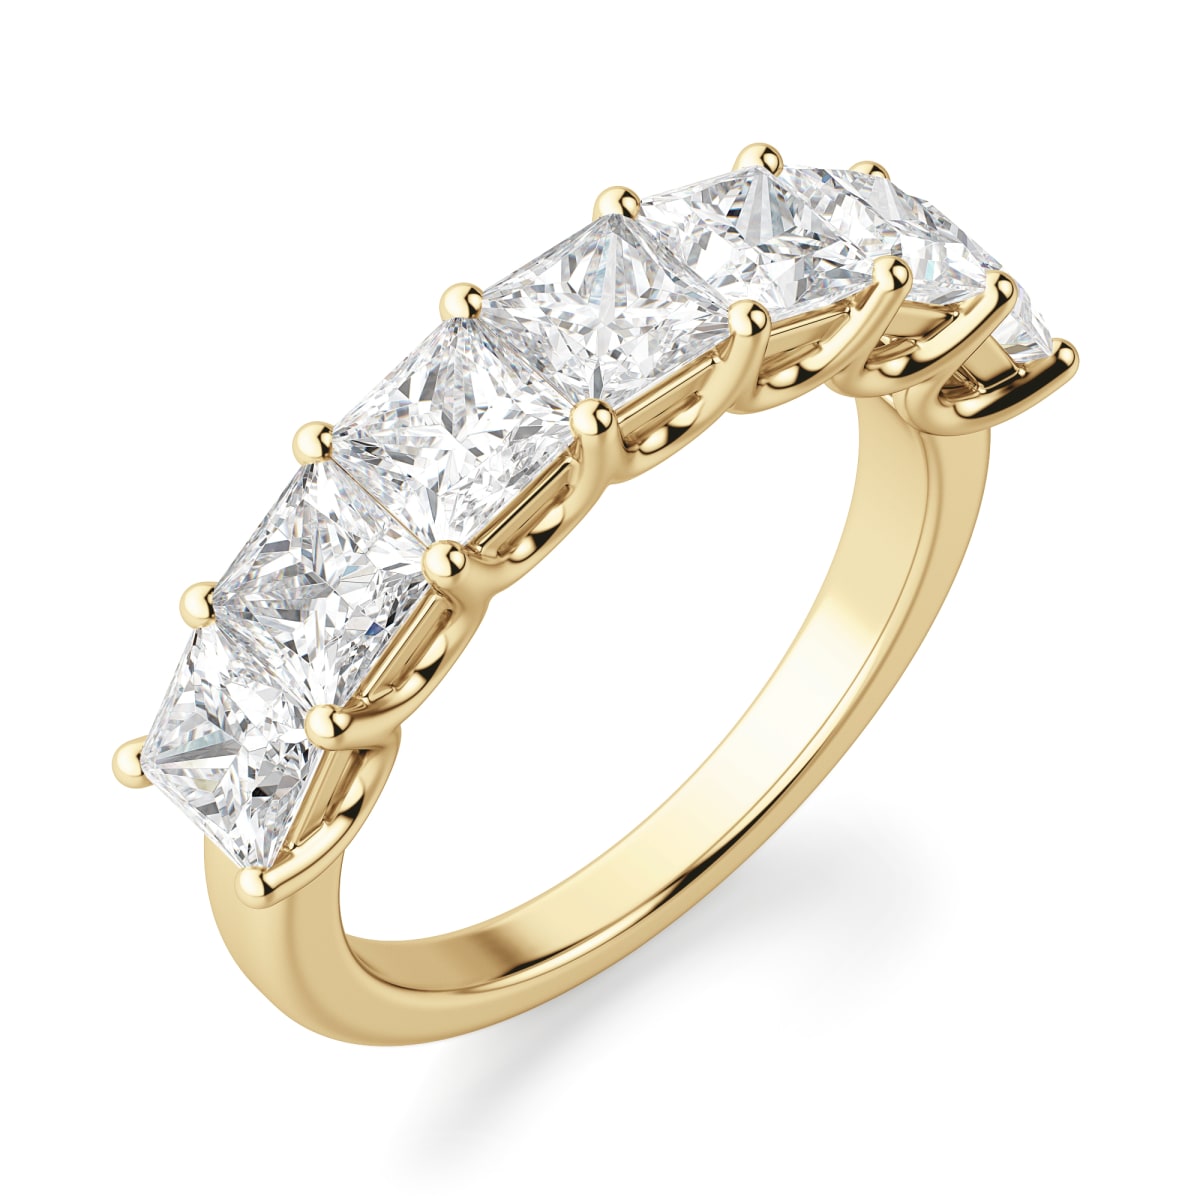 Princess Cut Seven Stone Wedding Band, Ring Size 5.25, 14K Yellow Gold, Moissanite